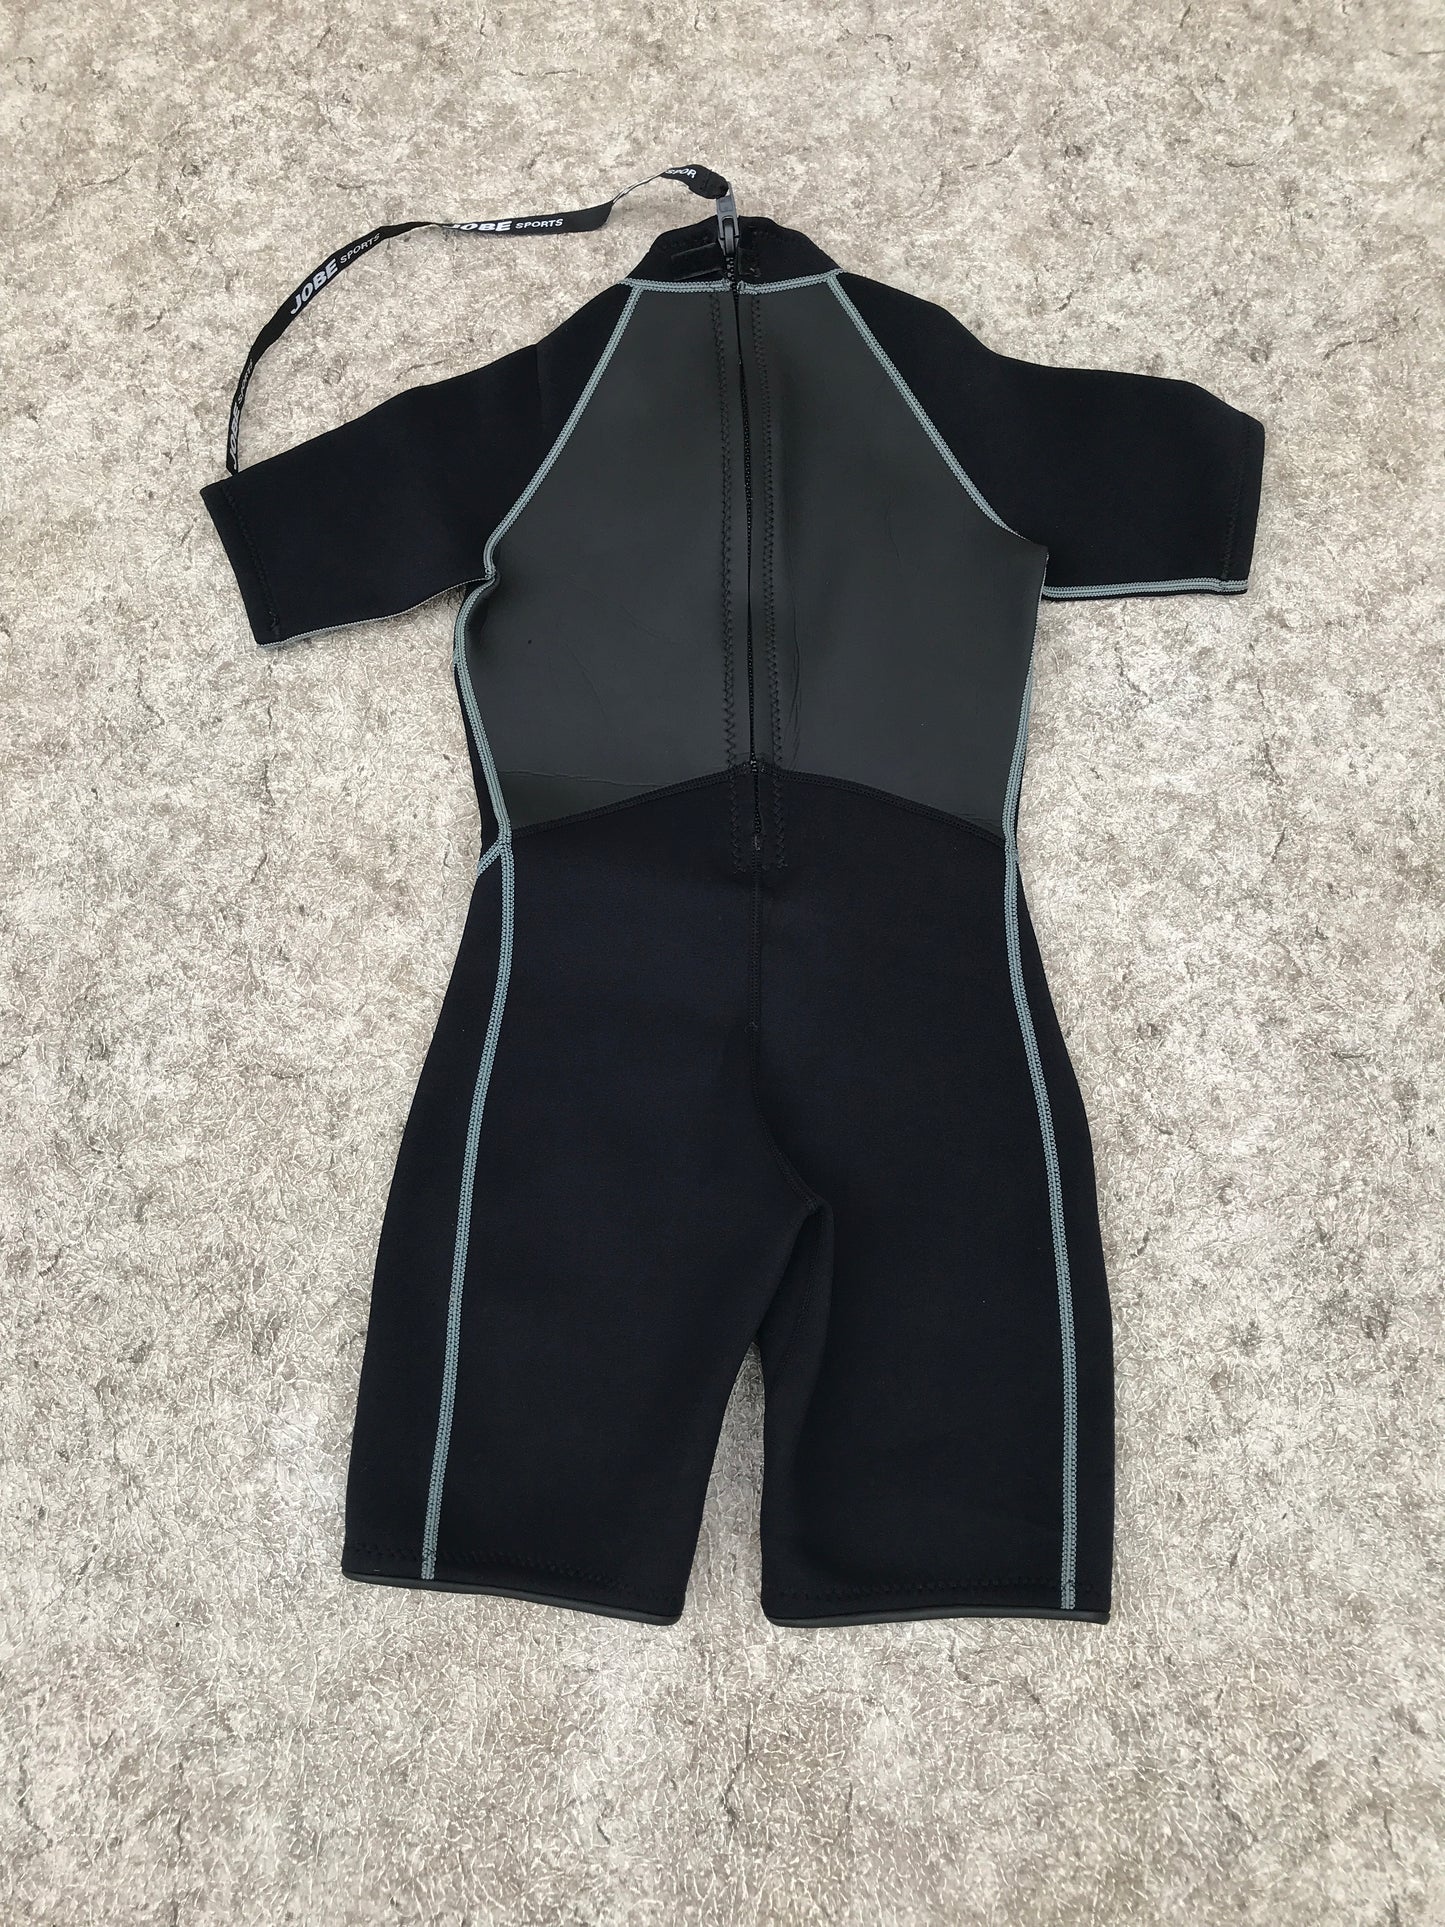 Wetsuit child size 14 youth jobe 2-3 mm black grey